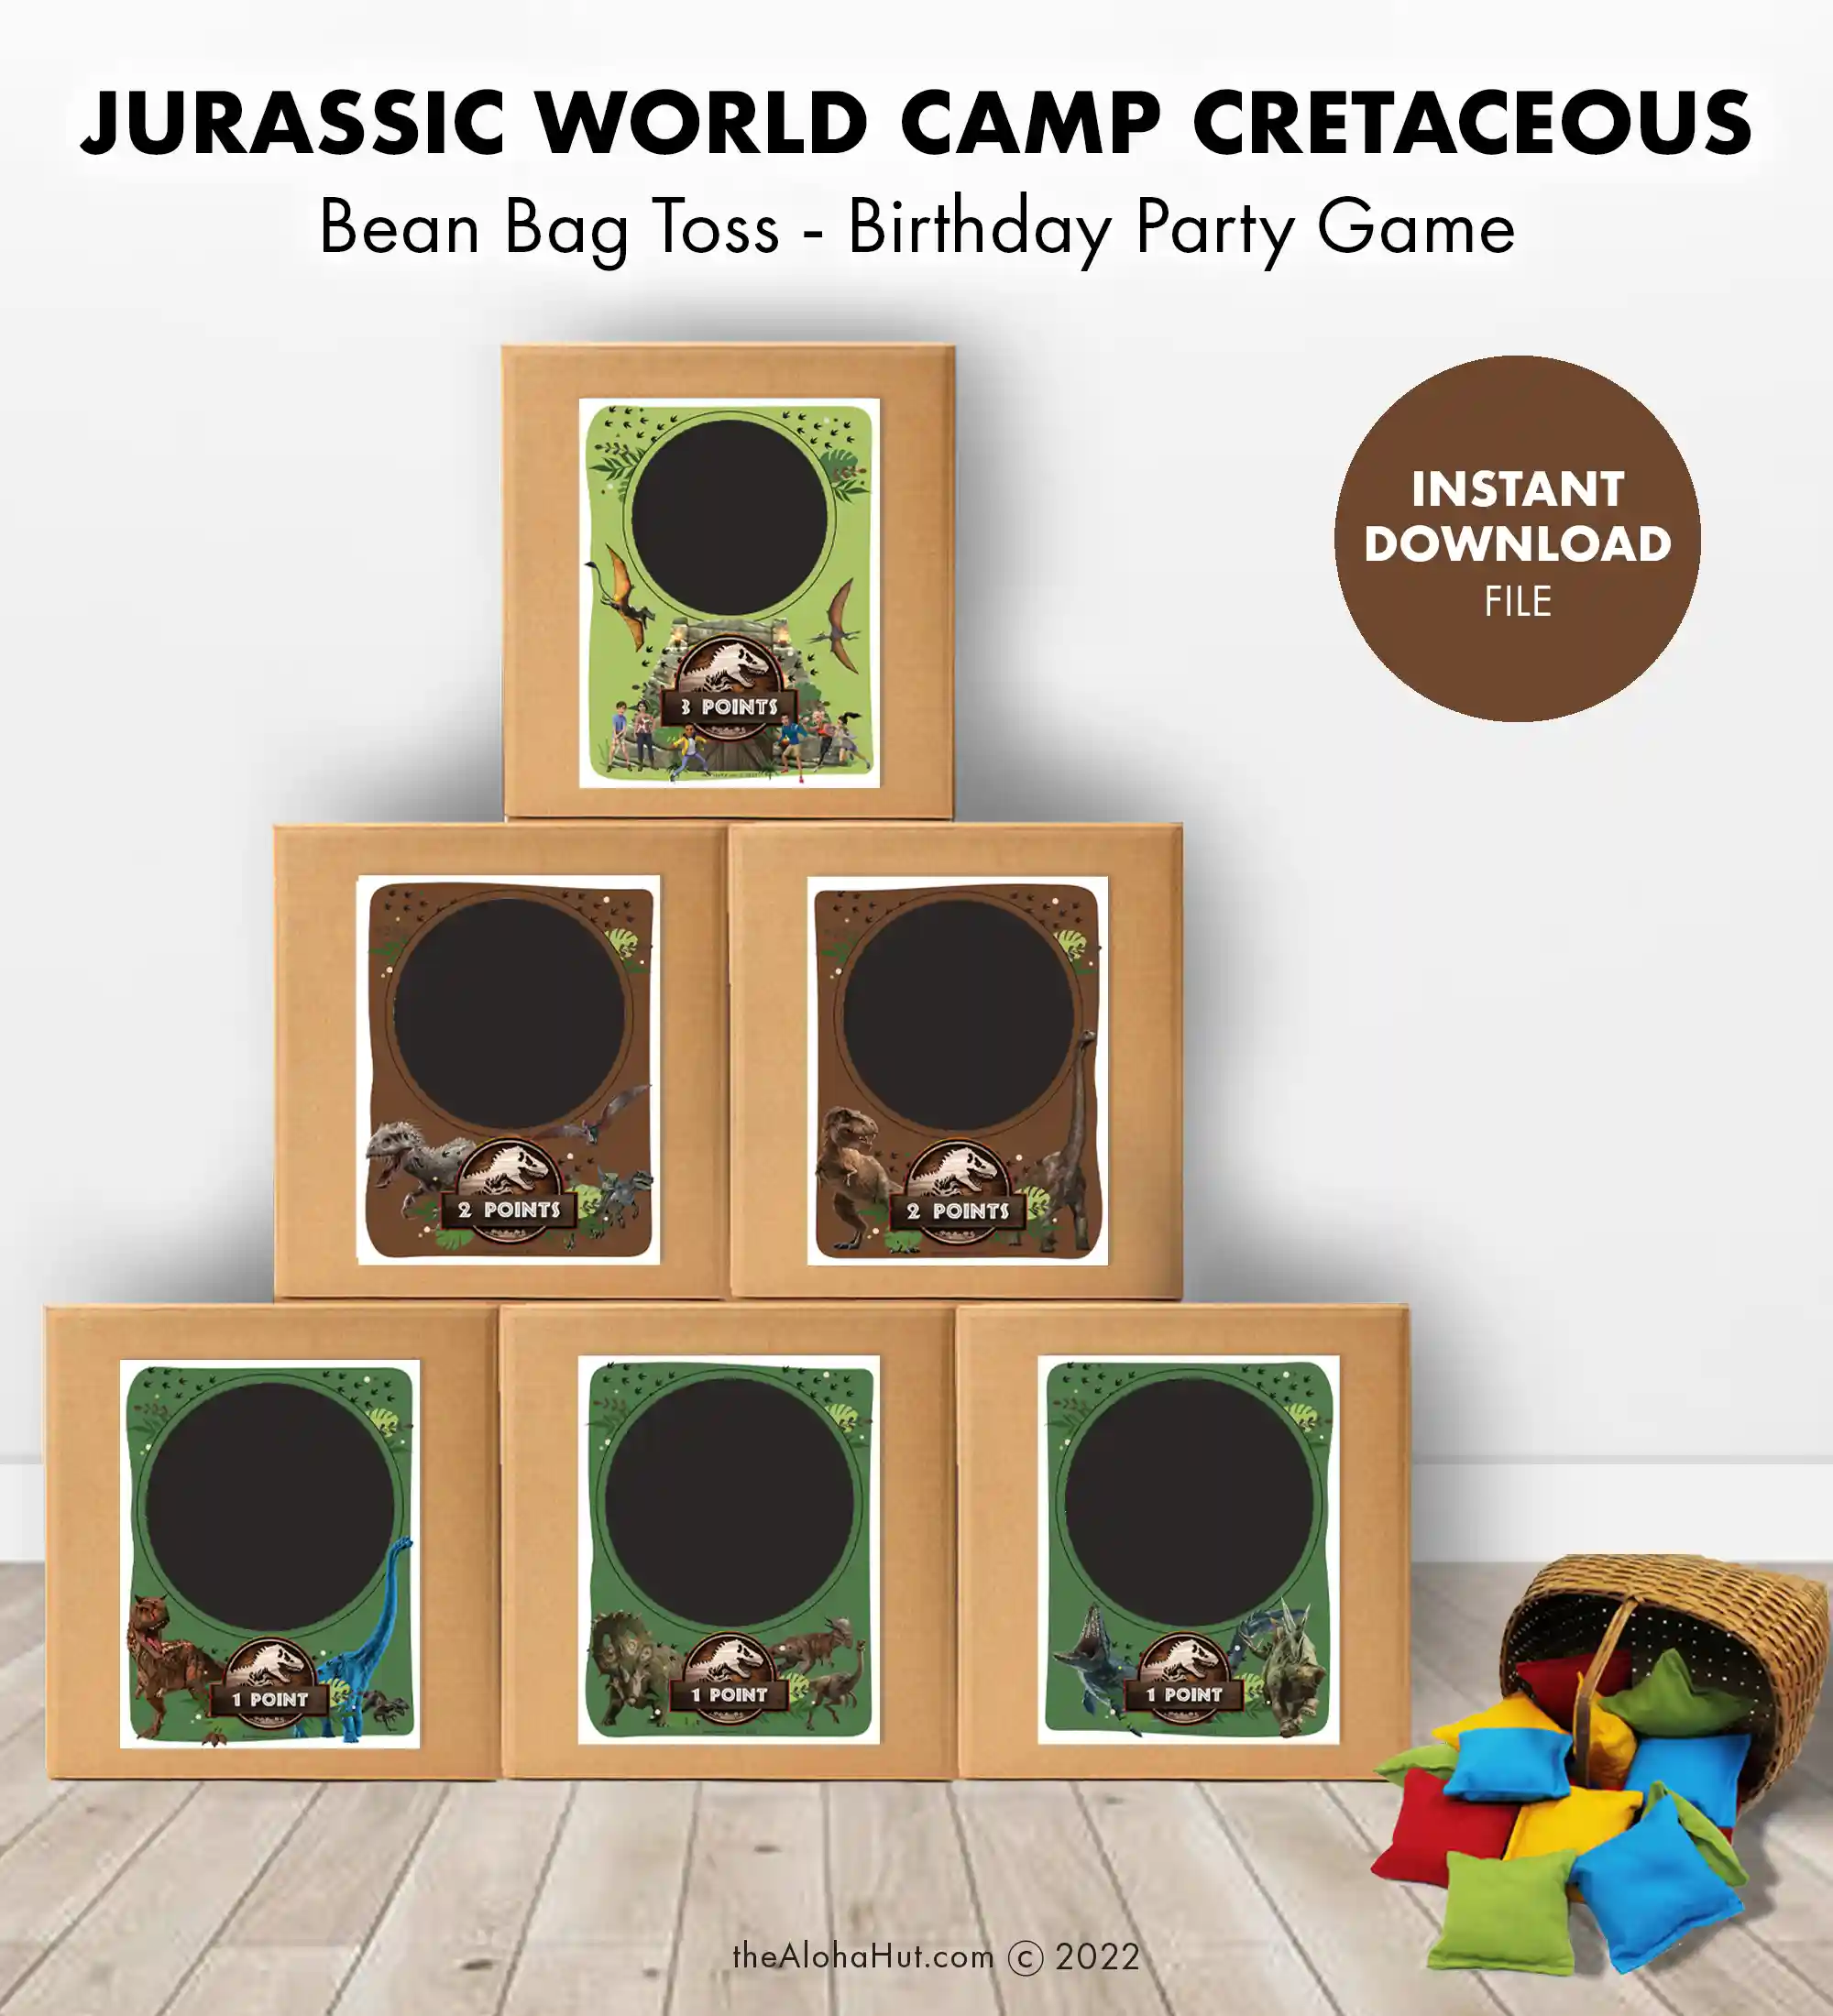 Jurassic World Camp Cretaceous Party Ideas - Dinosaur Party Ideas - free printable party decor & games - bean bag toss